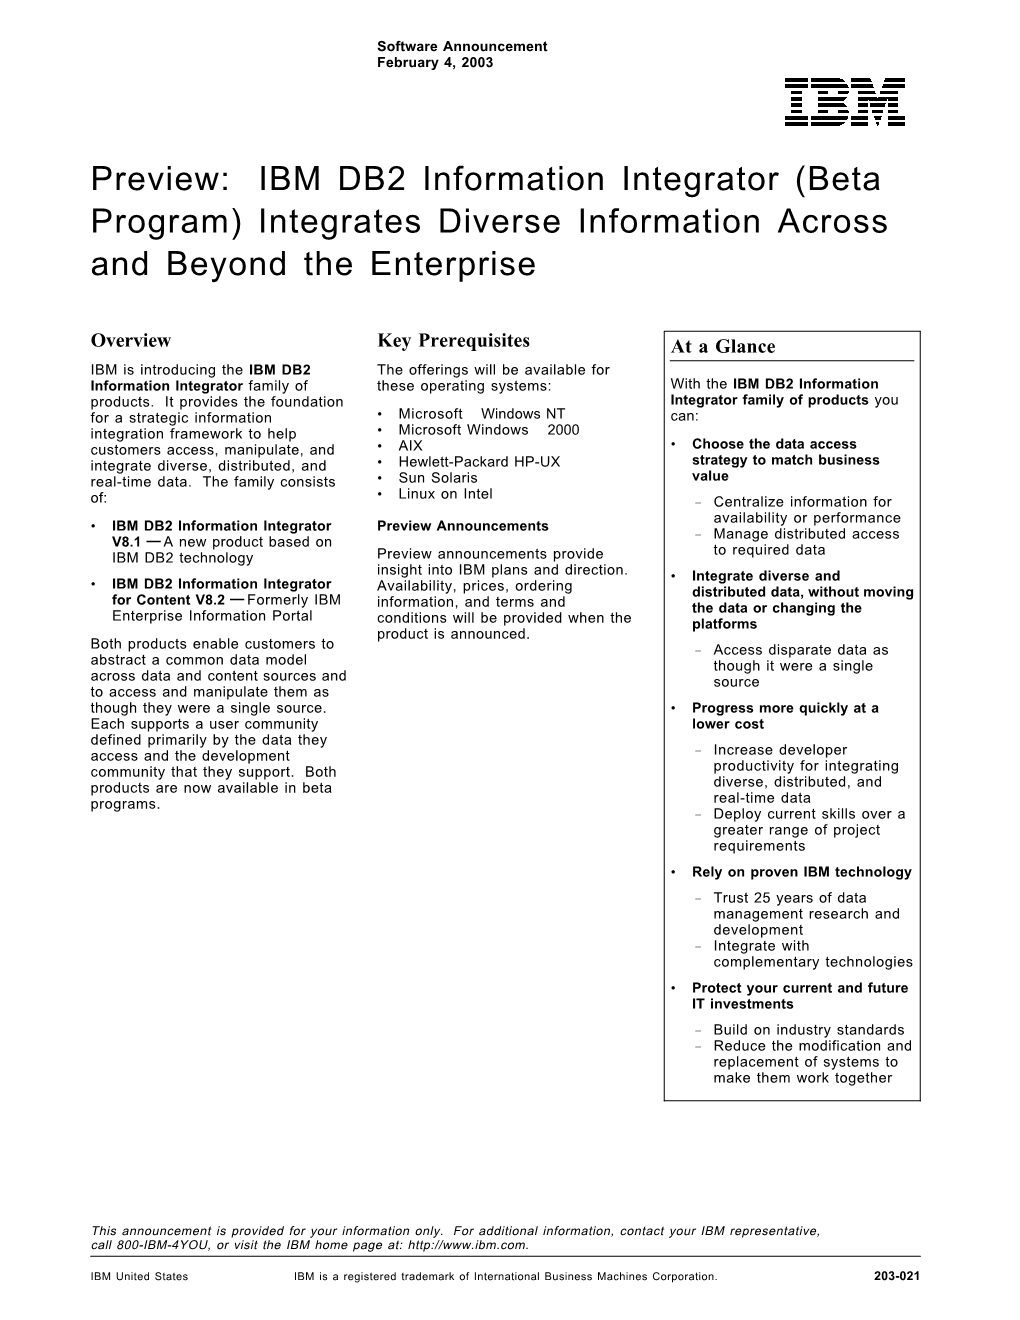 Preview: IBM DB2 Information Integrator (Beta Program) Integrates Diverse Information Across and Beyond the Enterprise